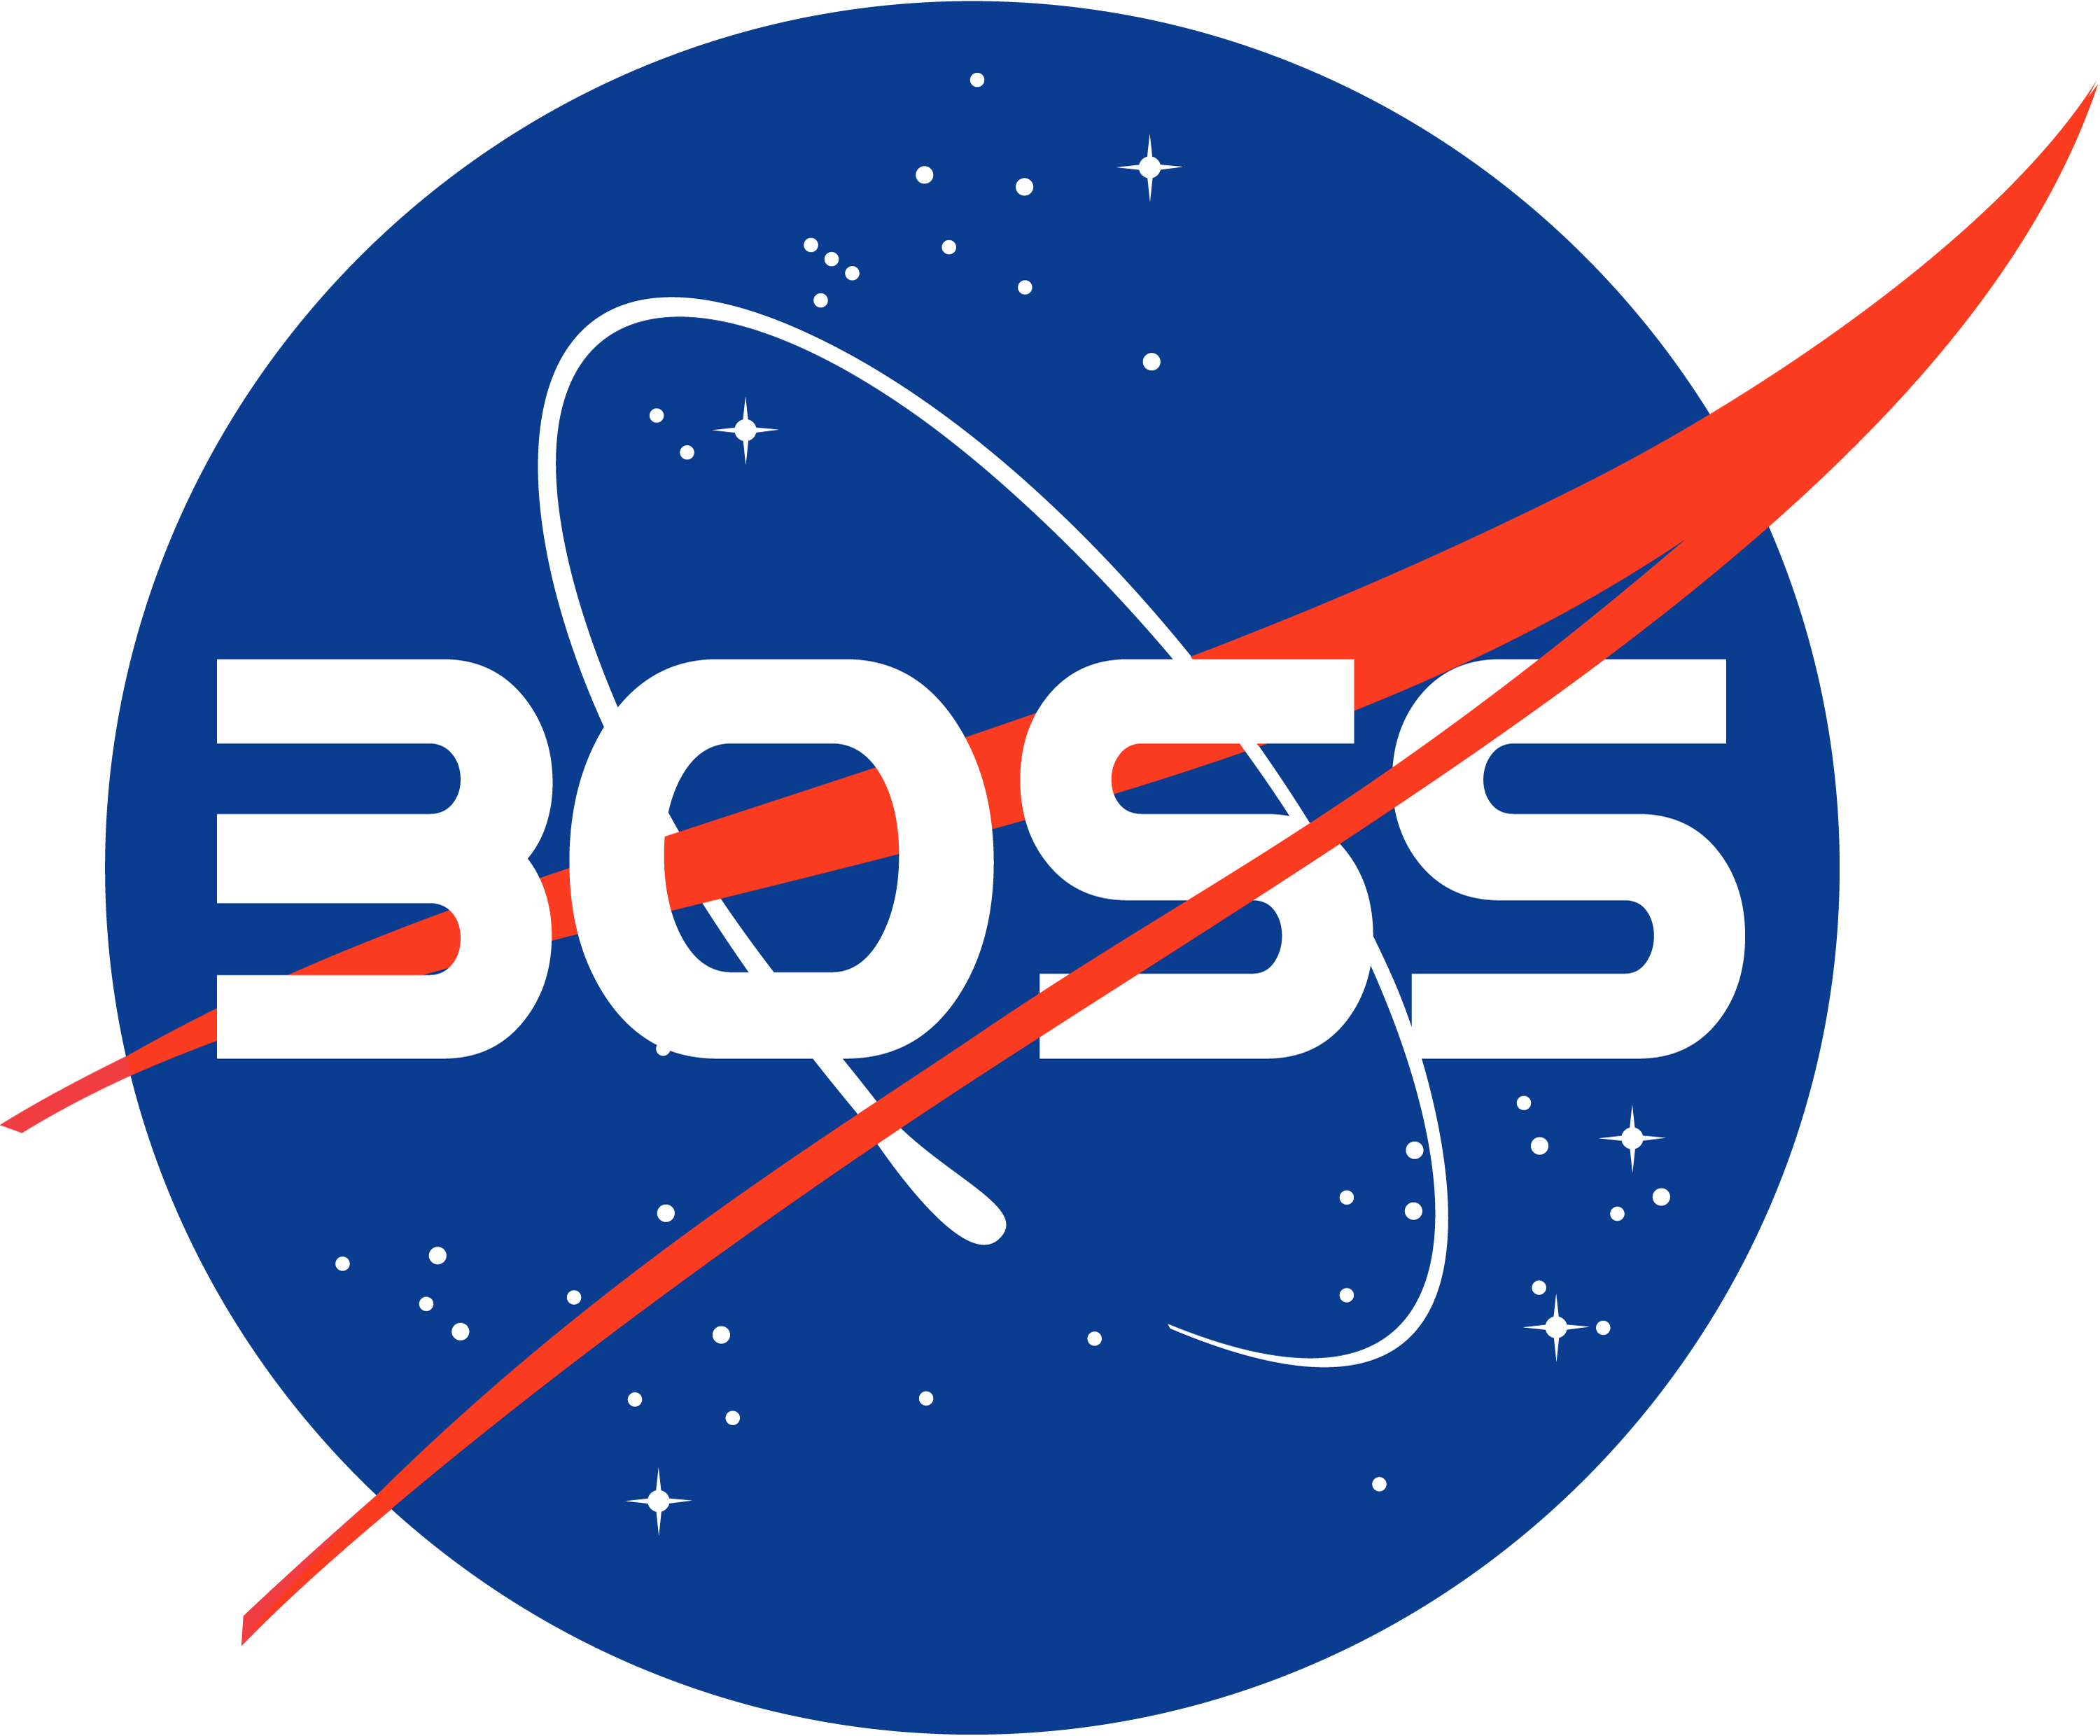 Boss Logo - I made a higher quality BOSS logo. : FilthyFrank